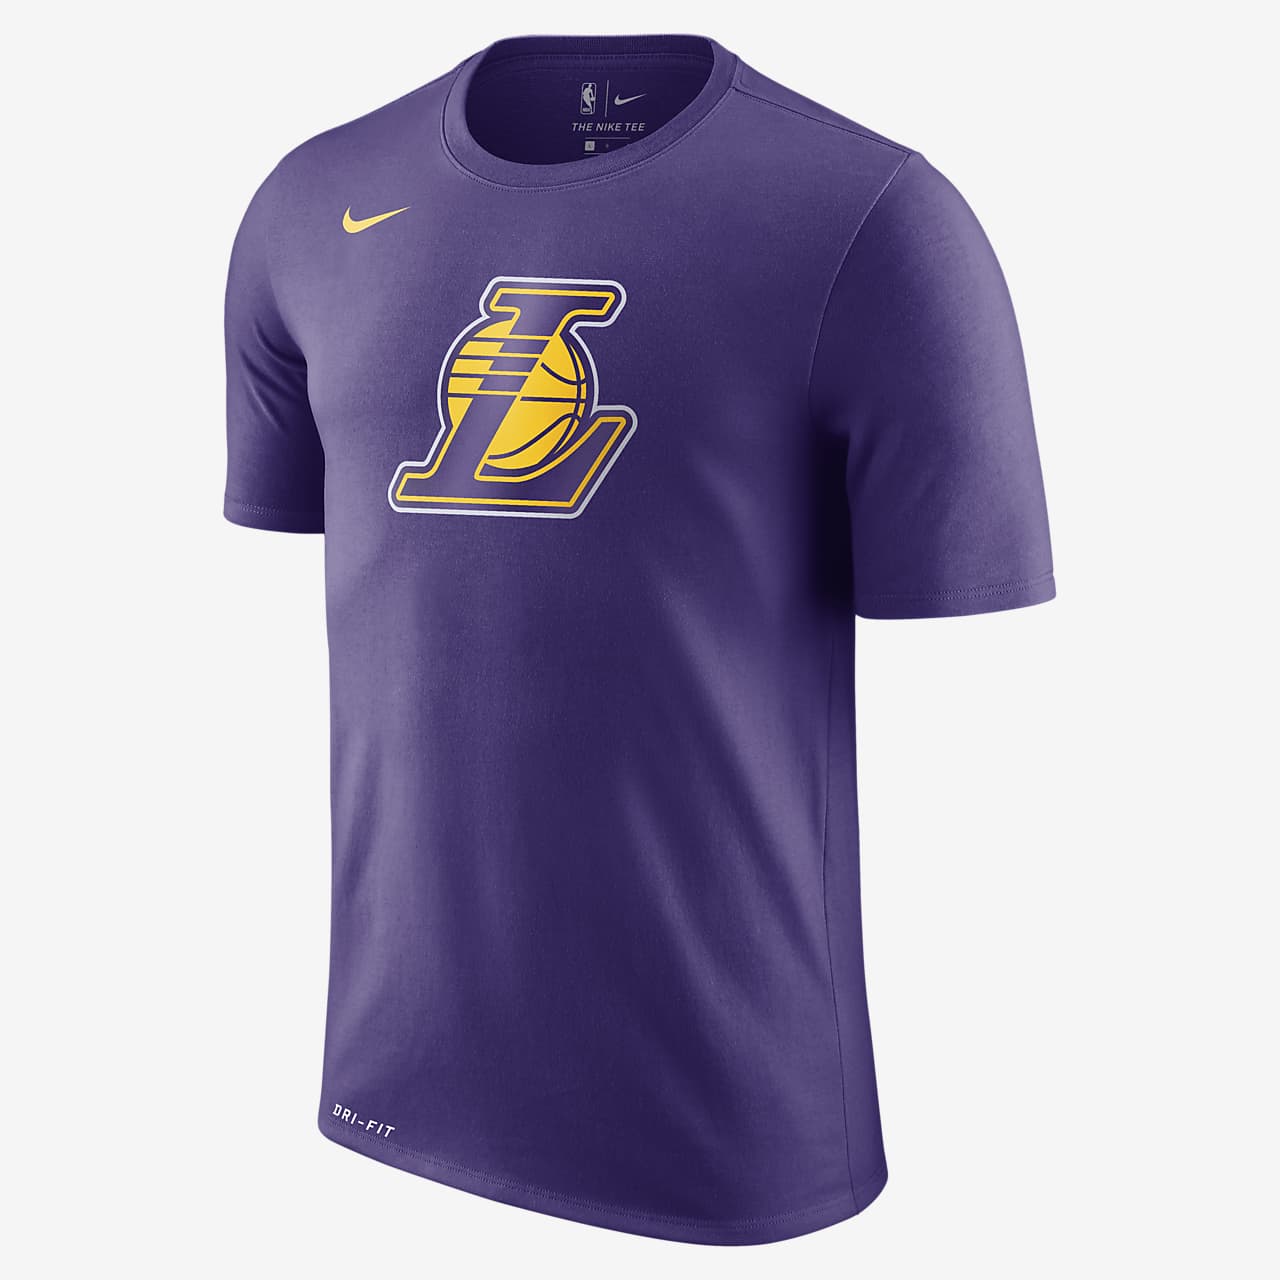 Los Angeles Lakers Nike Dry Logo Men's NBA T-Shirt